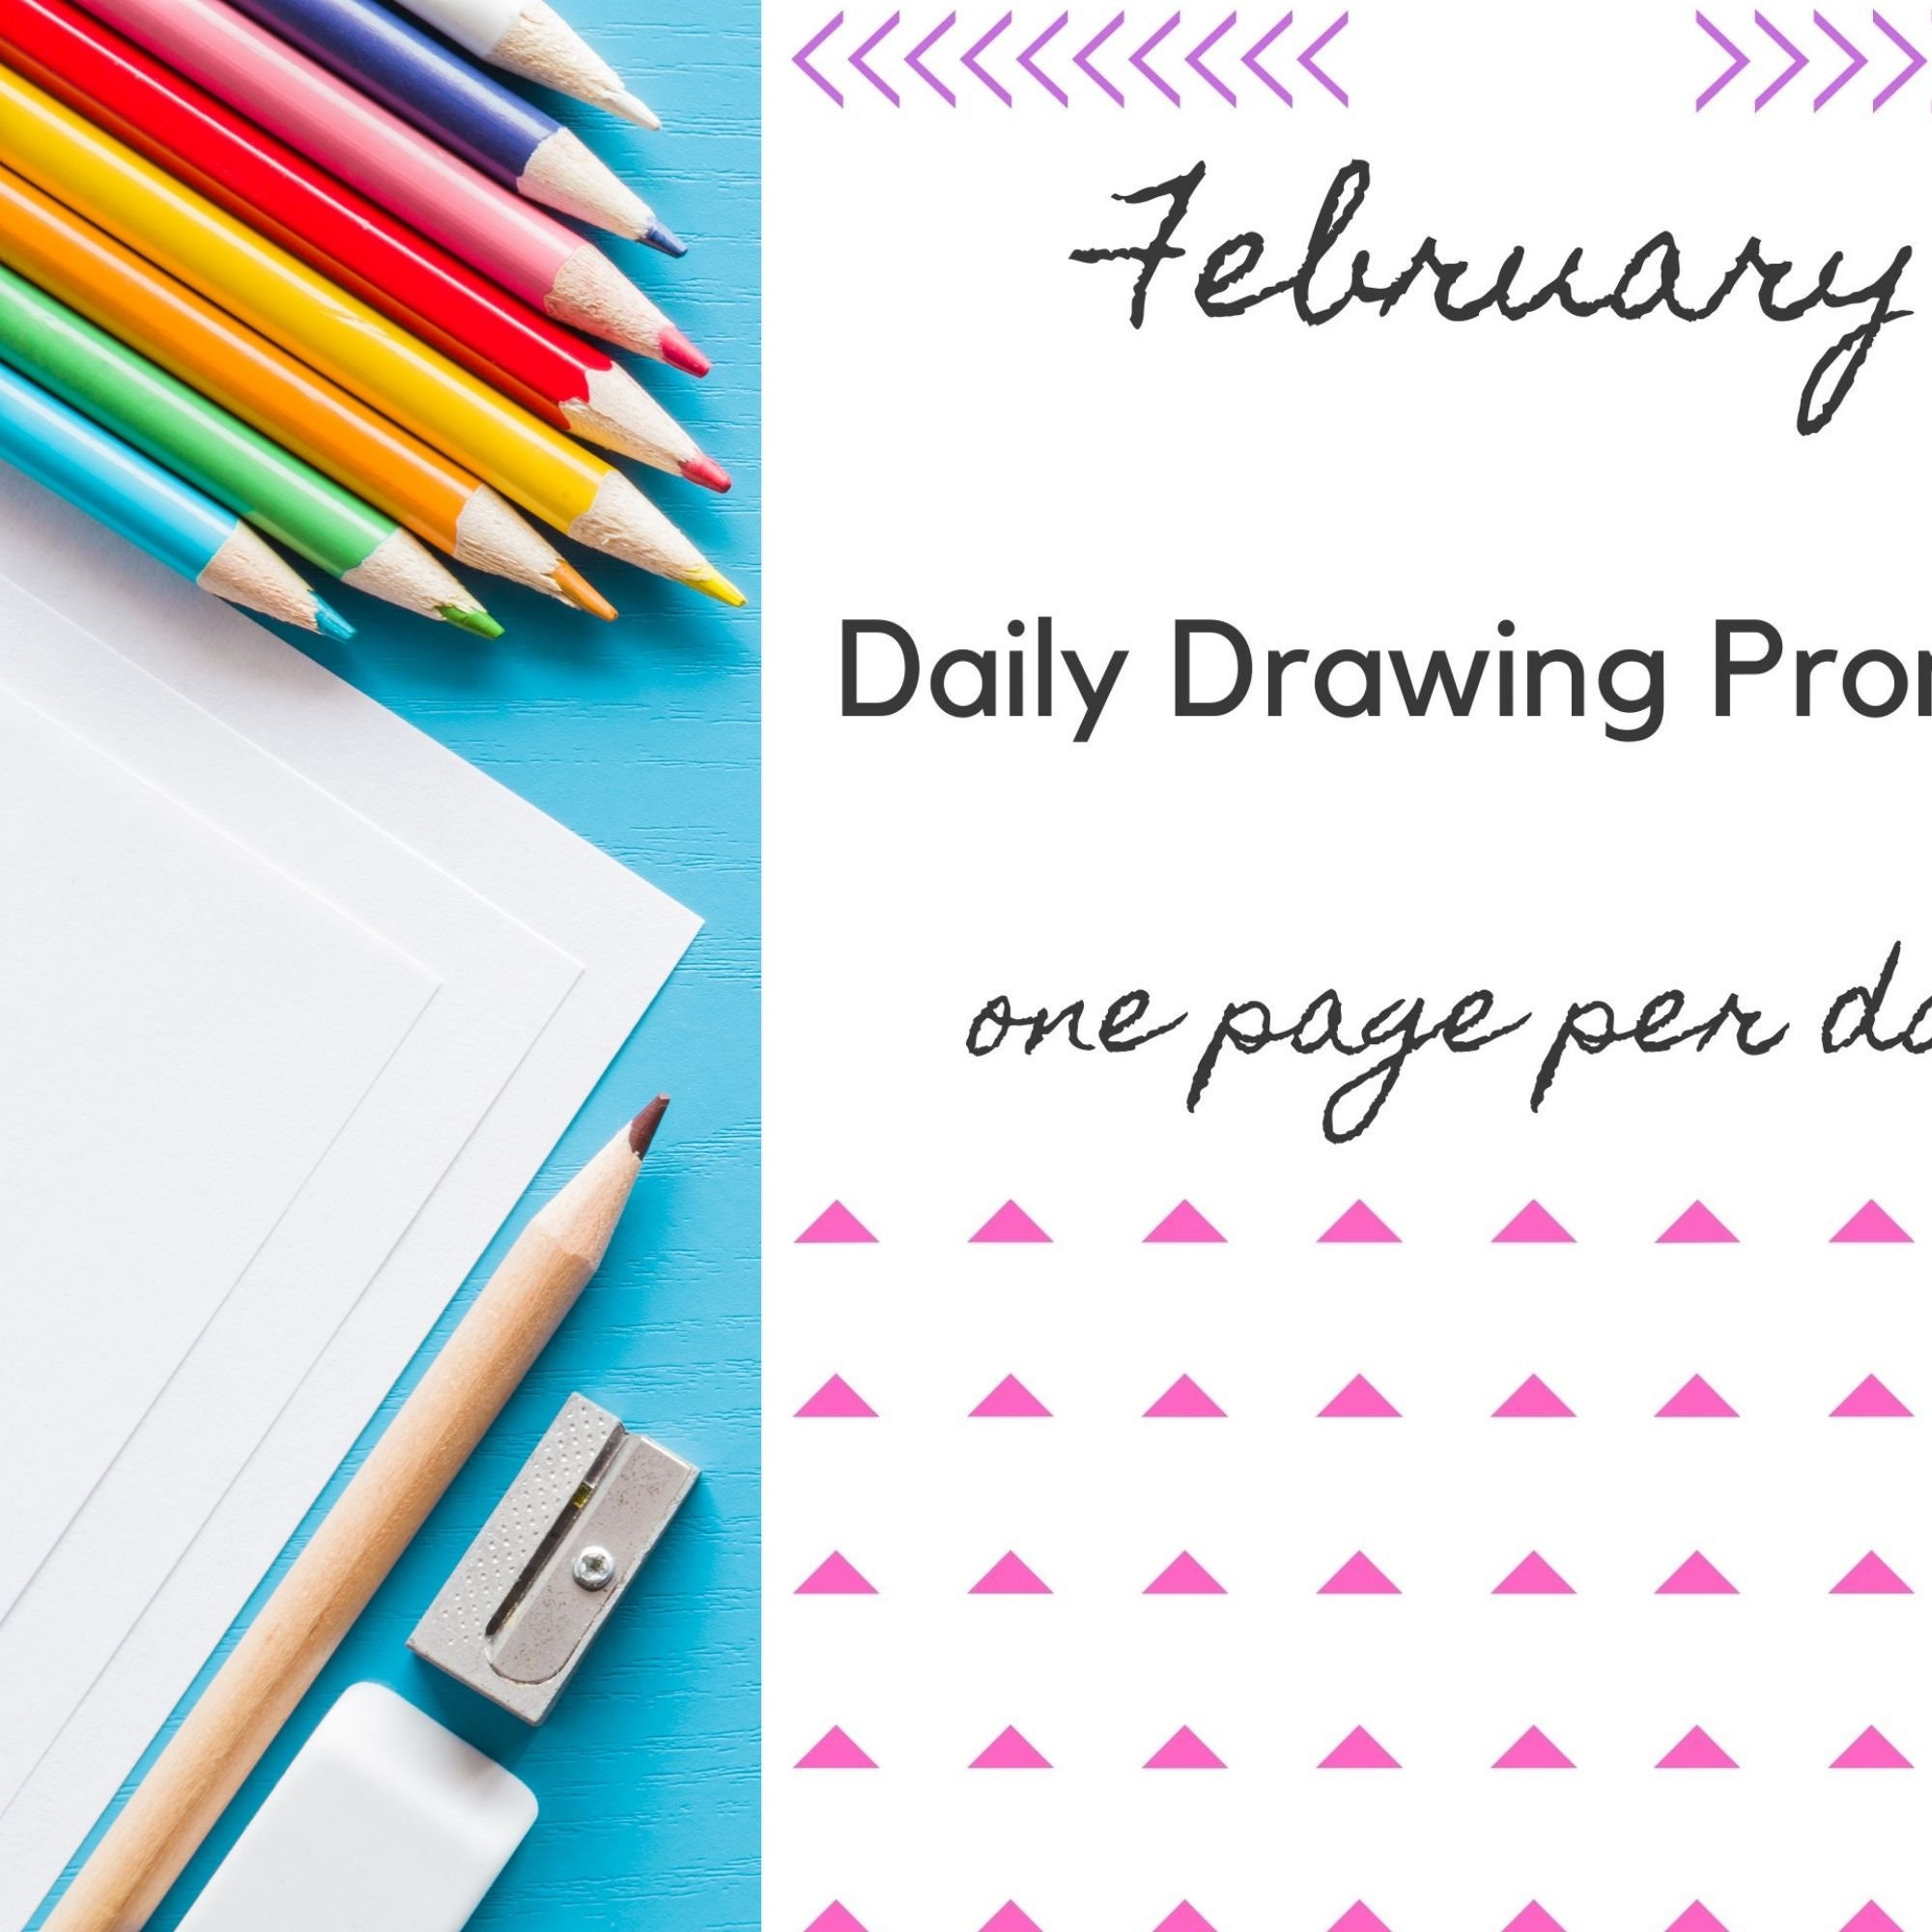 Daily Drawing Journal Sketchbook Prompts for August PDF and JPG digita –  Happymakeryart